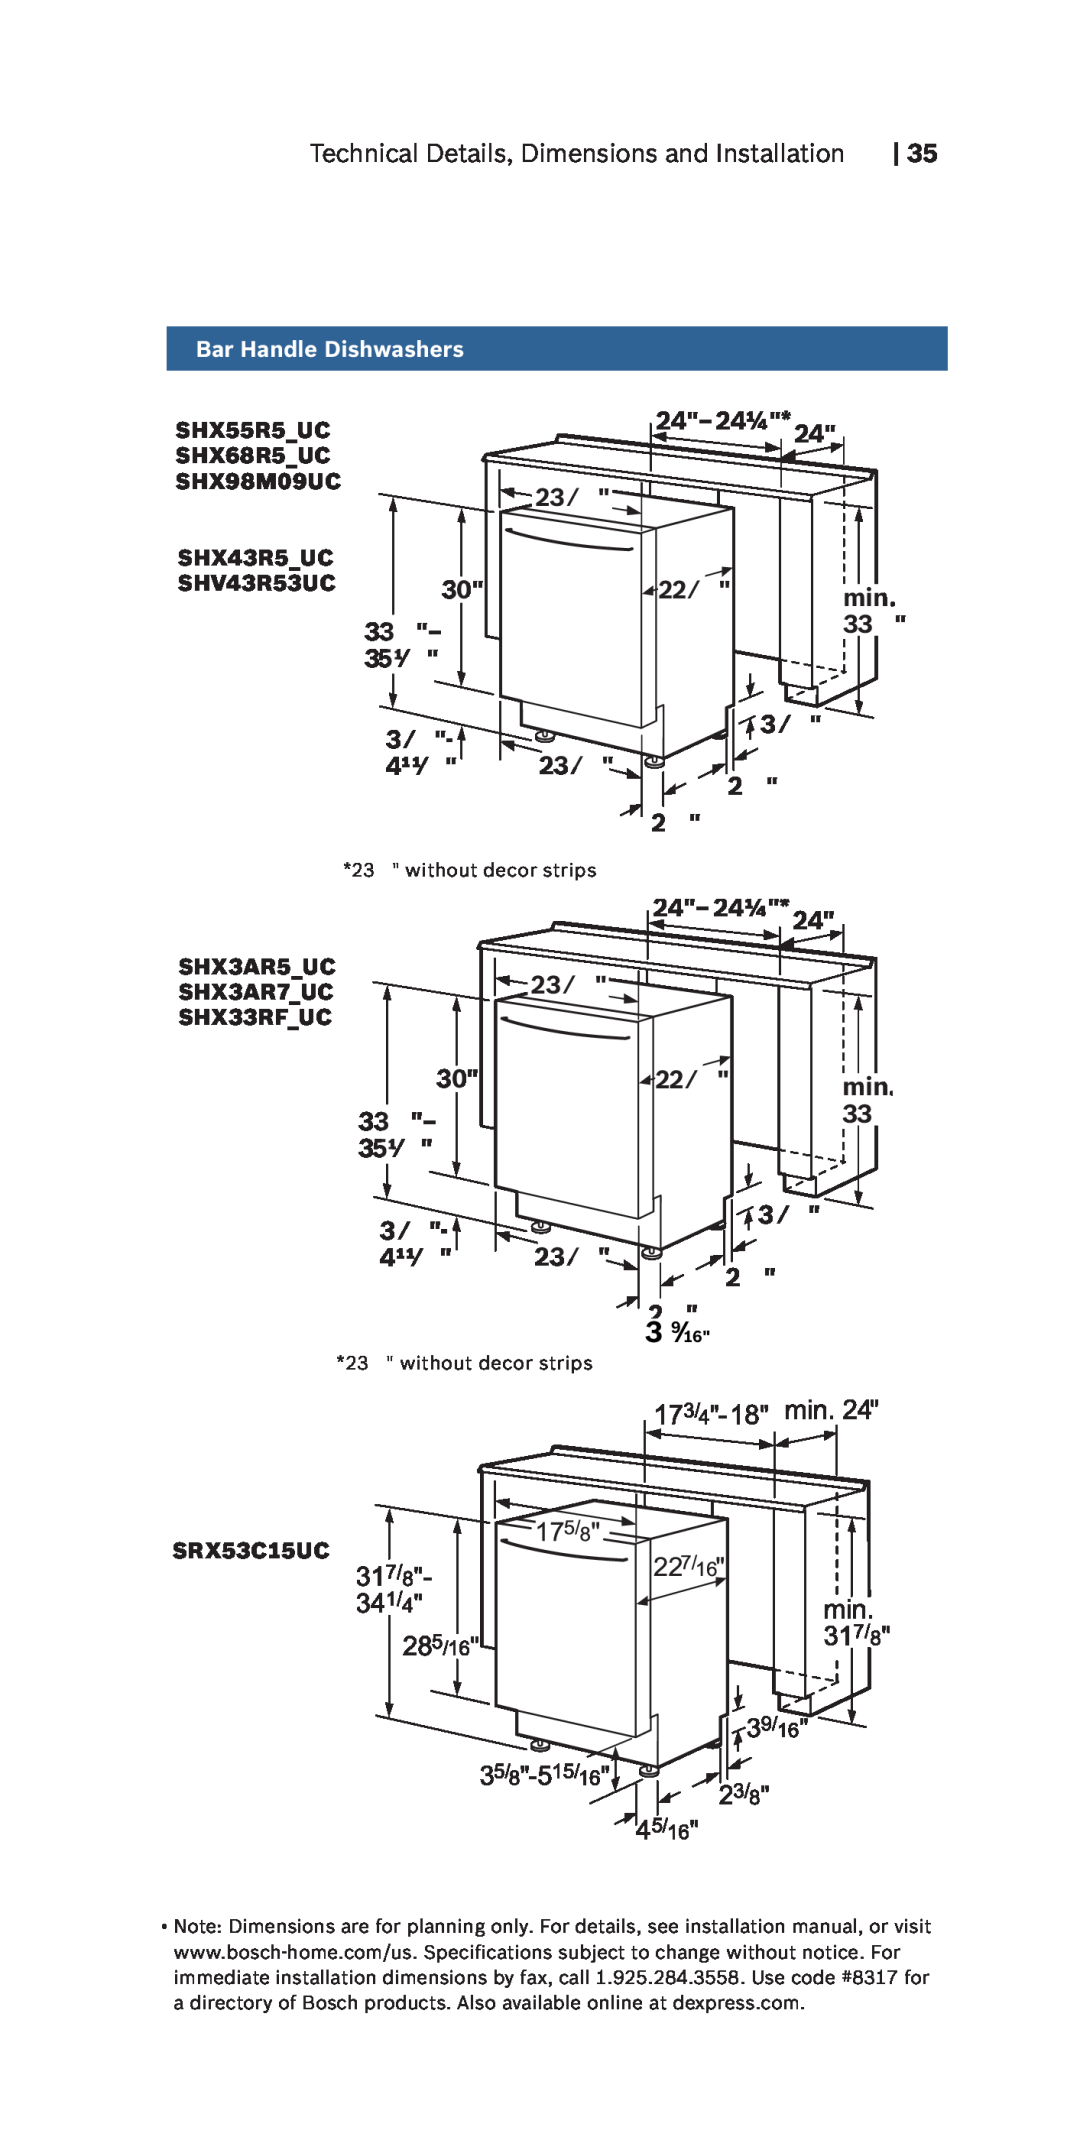 Bosch Appliances 800 Series manual 24-24¼*24, 35¹⁄, 4¹¹⁄ 